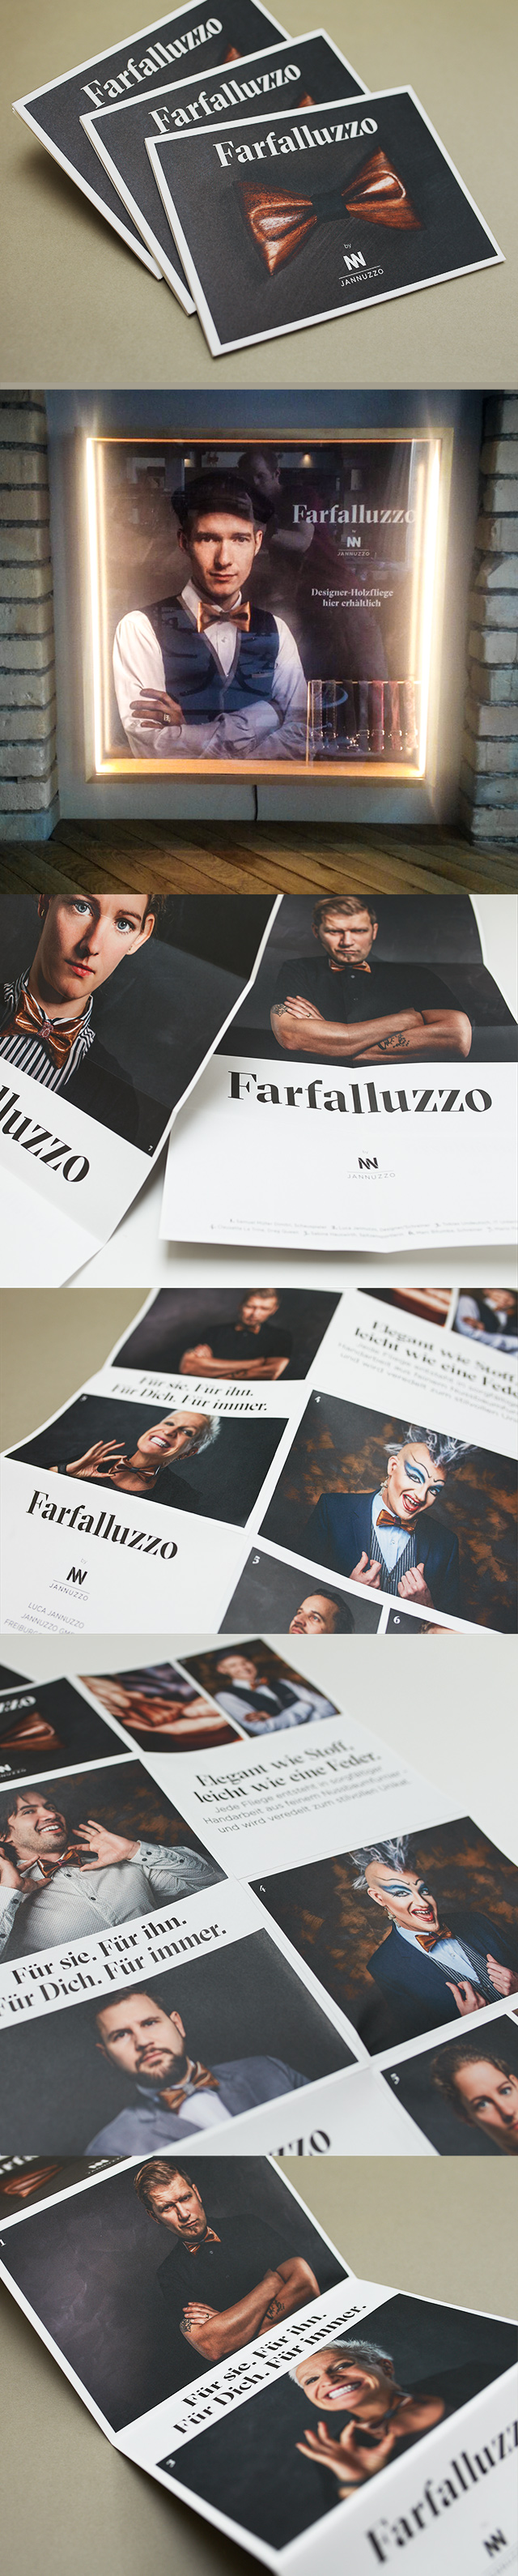 GLUNZ Projekt: Farfalluzzo - Mobile version